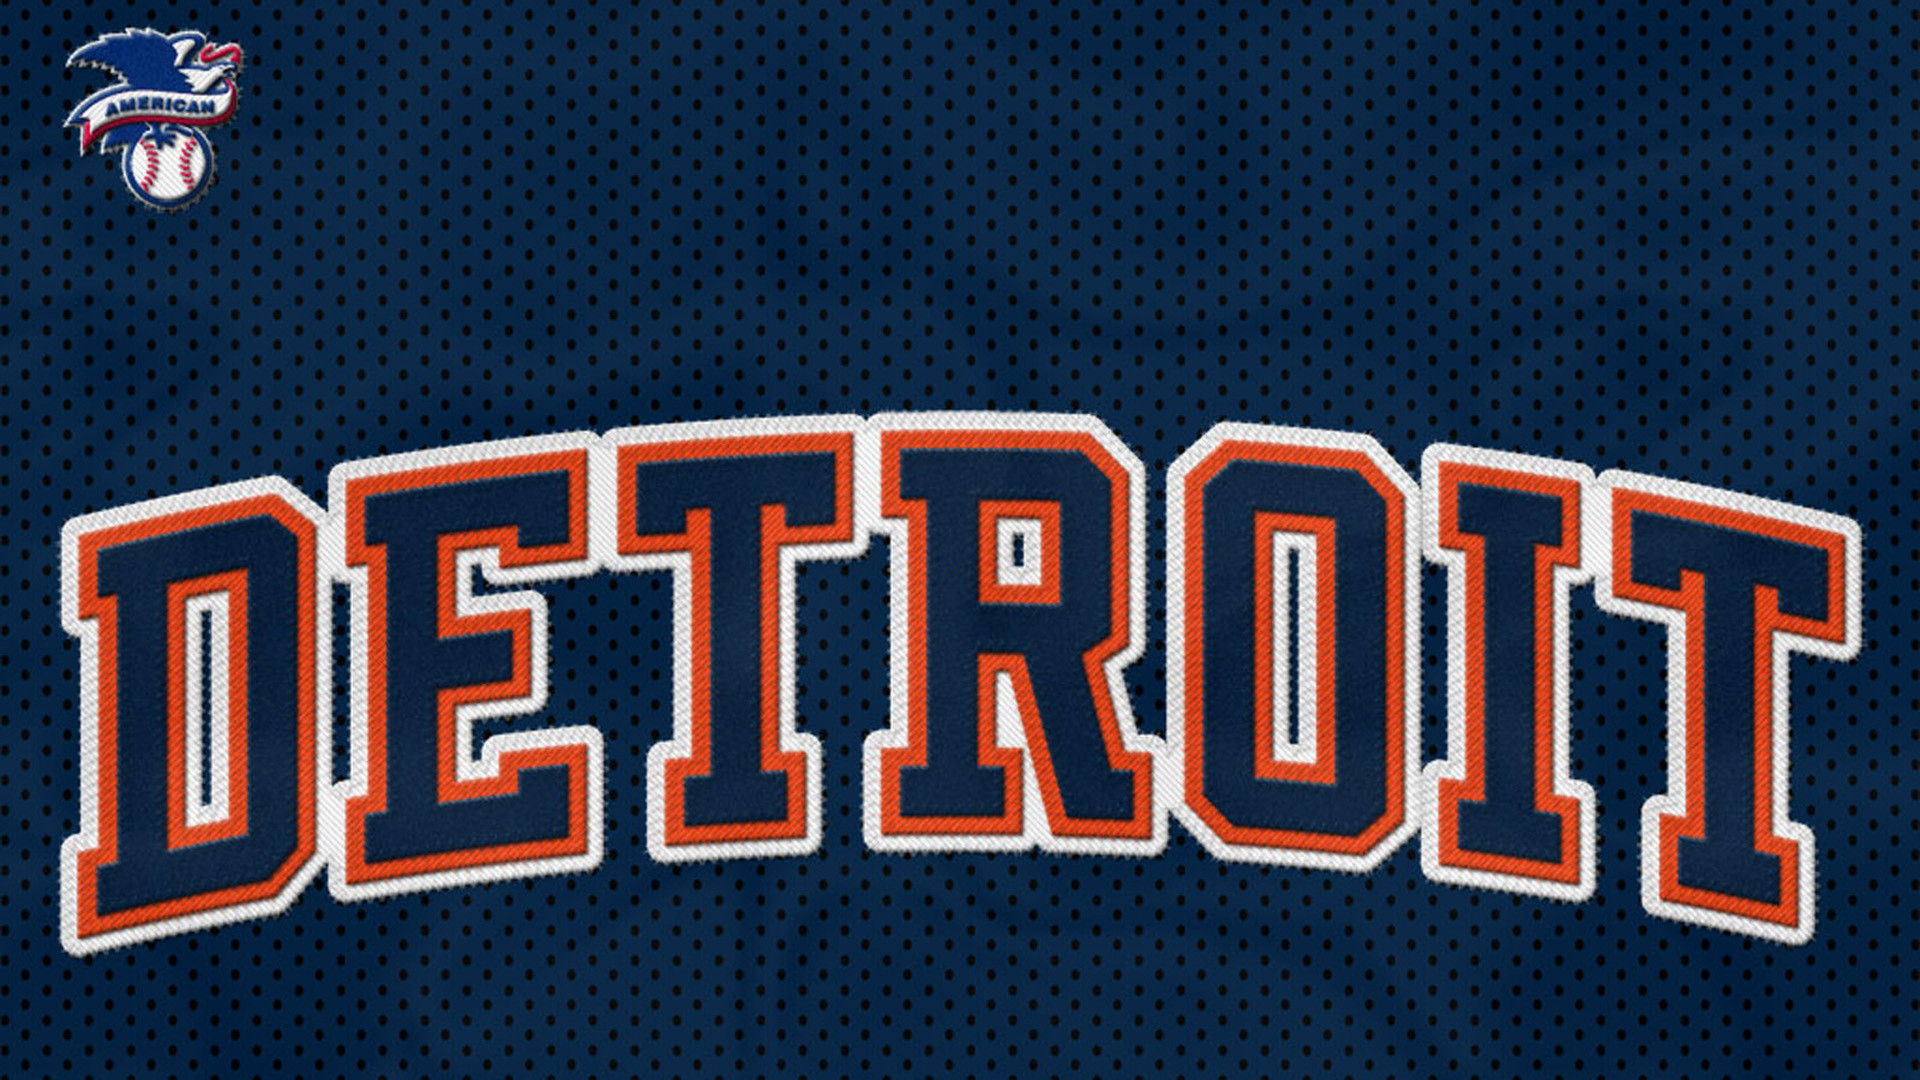 2023 Detroit Tigers wallpaper – Pro Sports Backgrounds